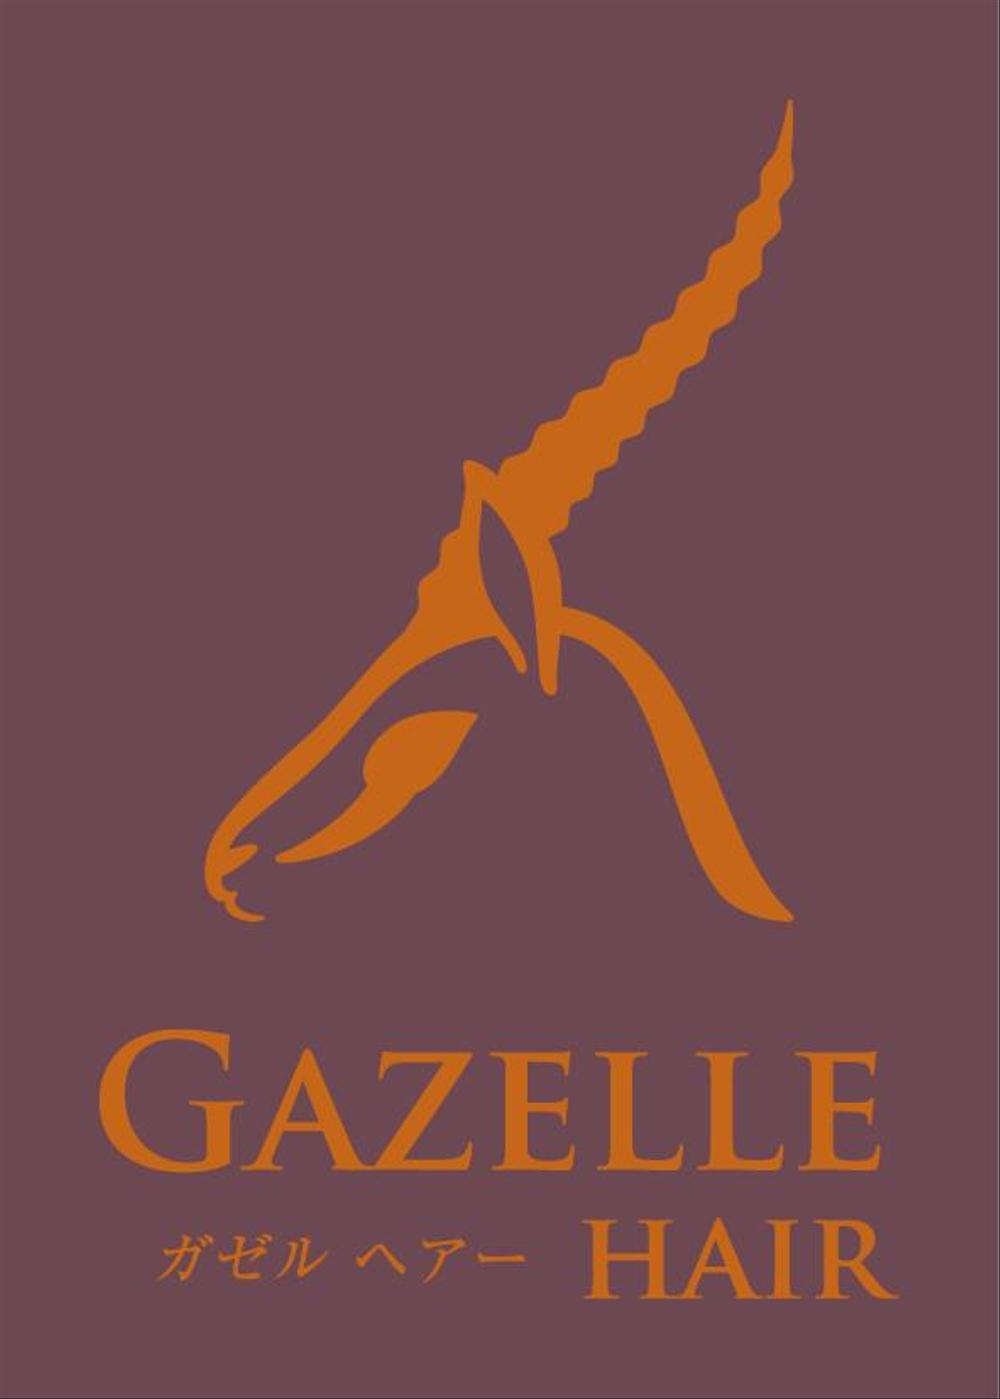 Gazelle_hair2.png